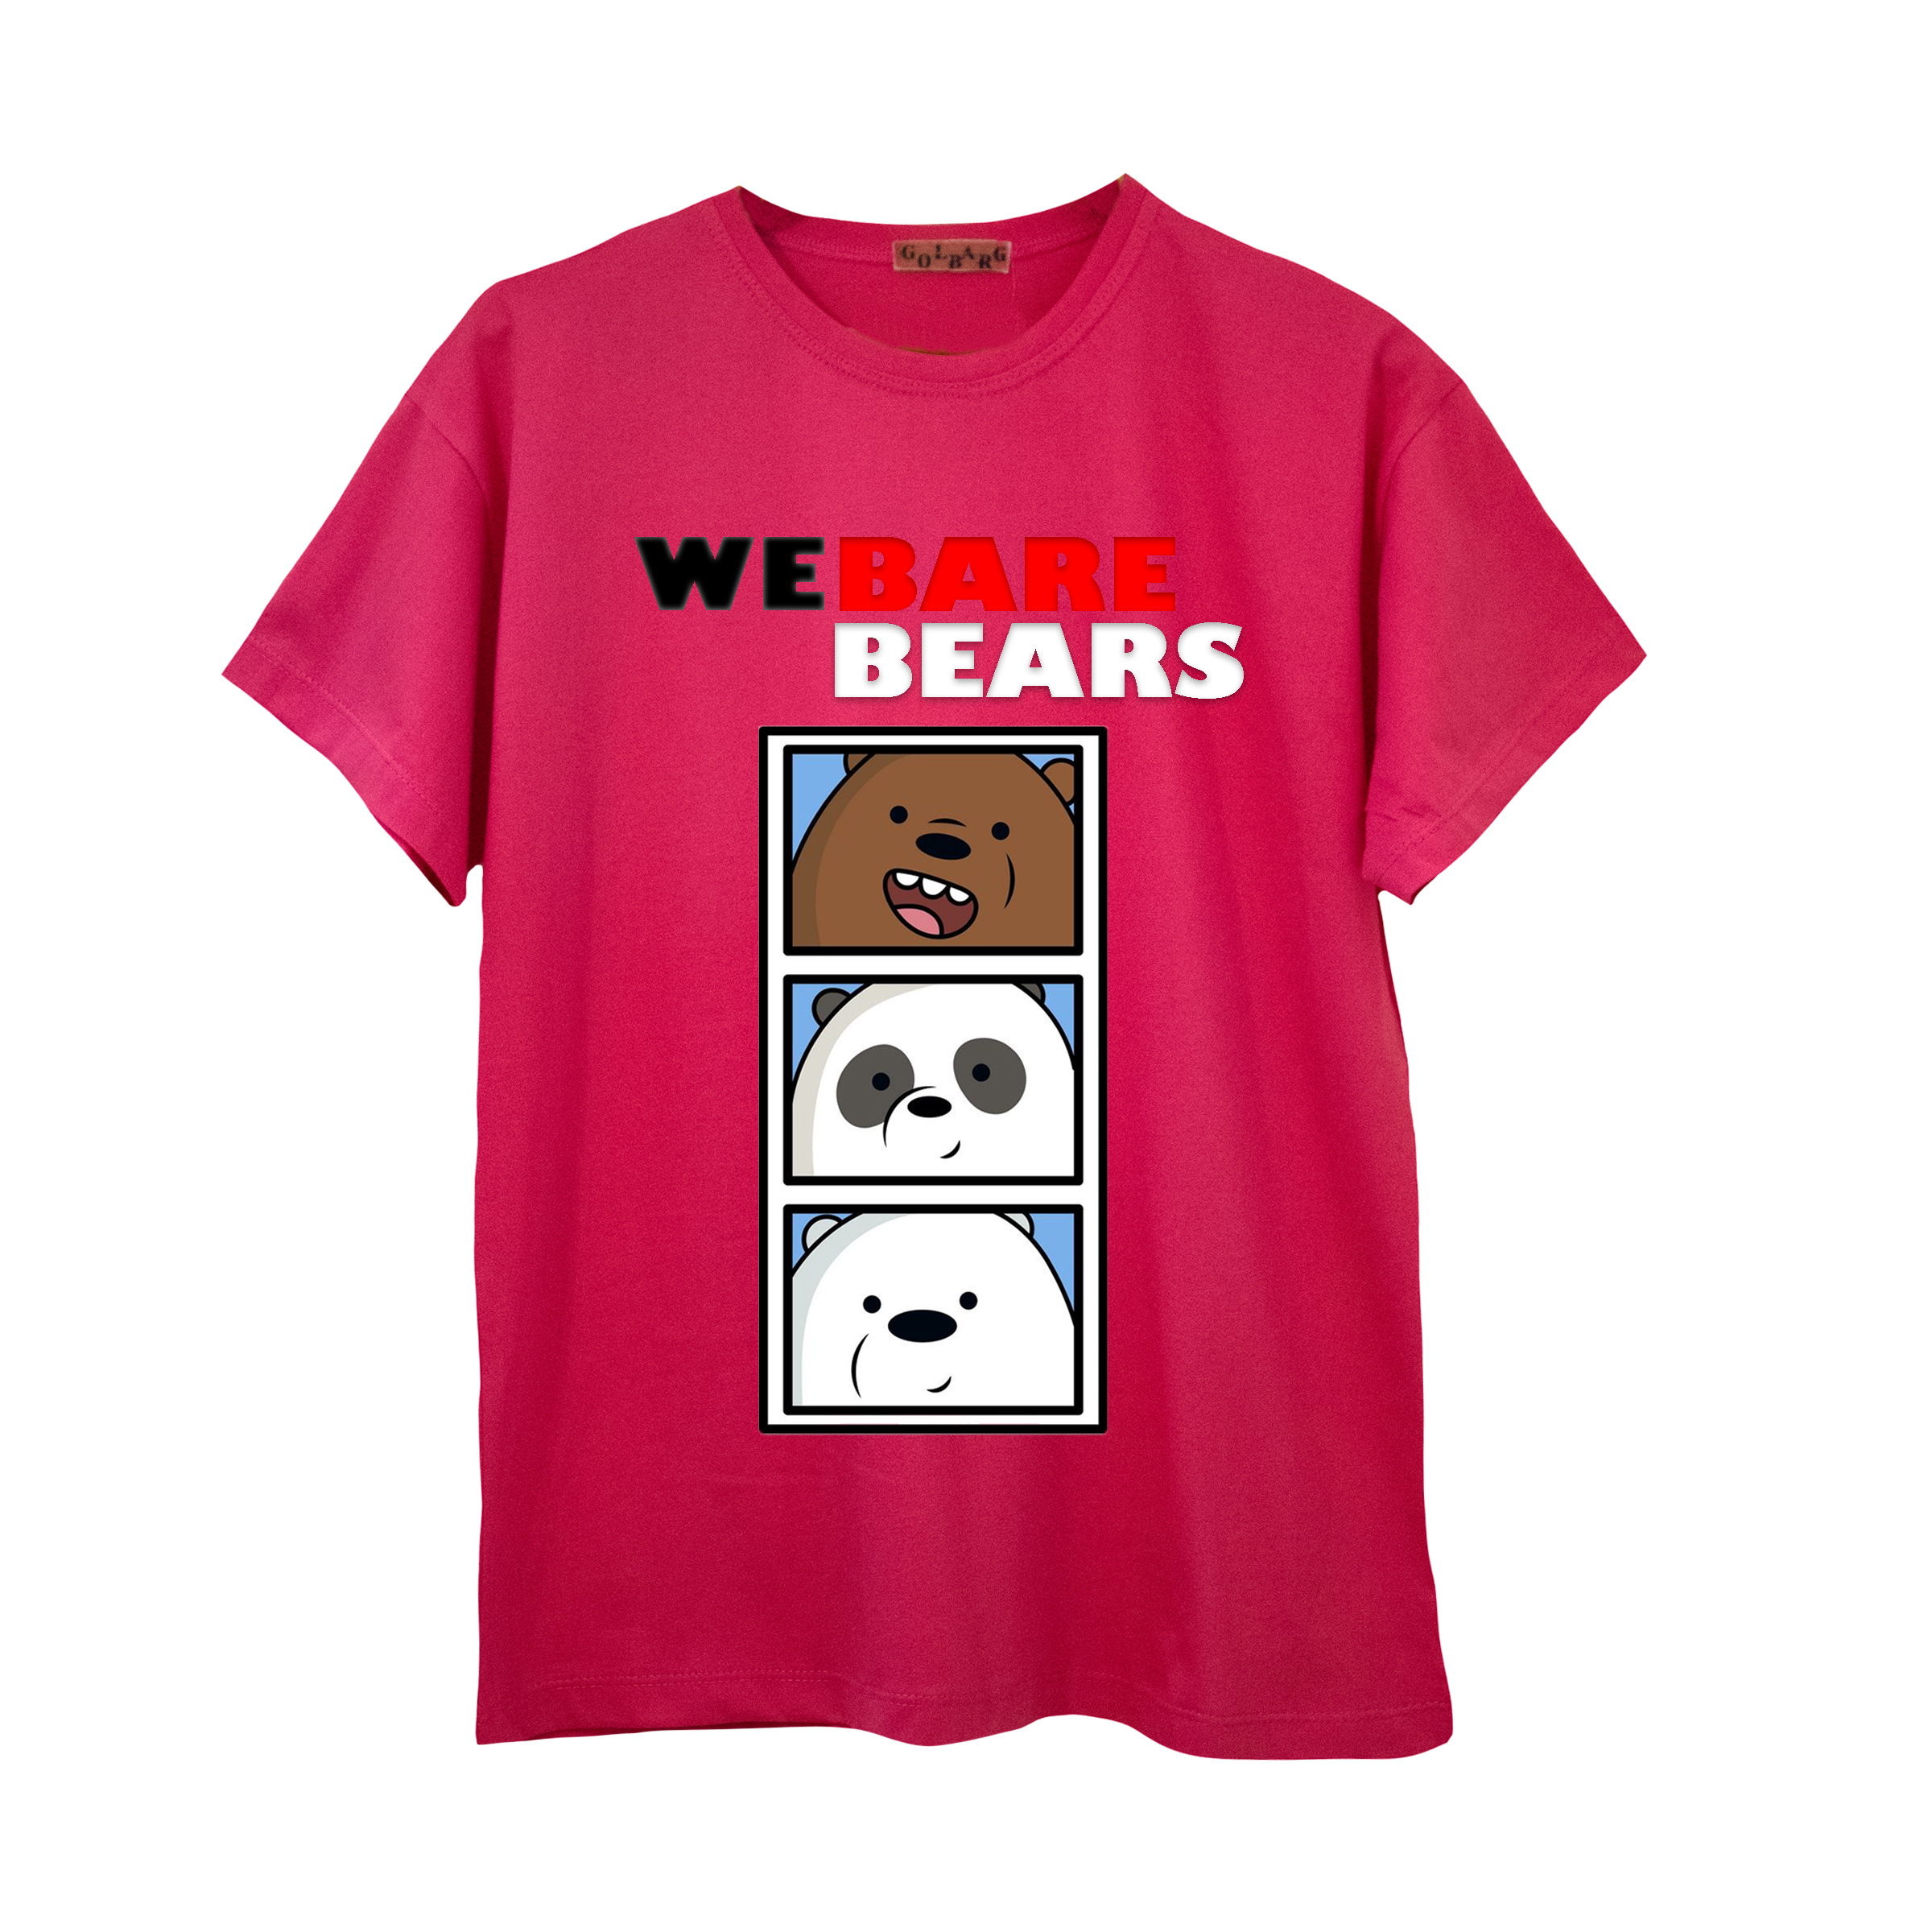 تی شرت آستین کوتاه زنانه مدل سه خرس کارتونی رنگ سرخابی